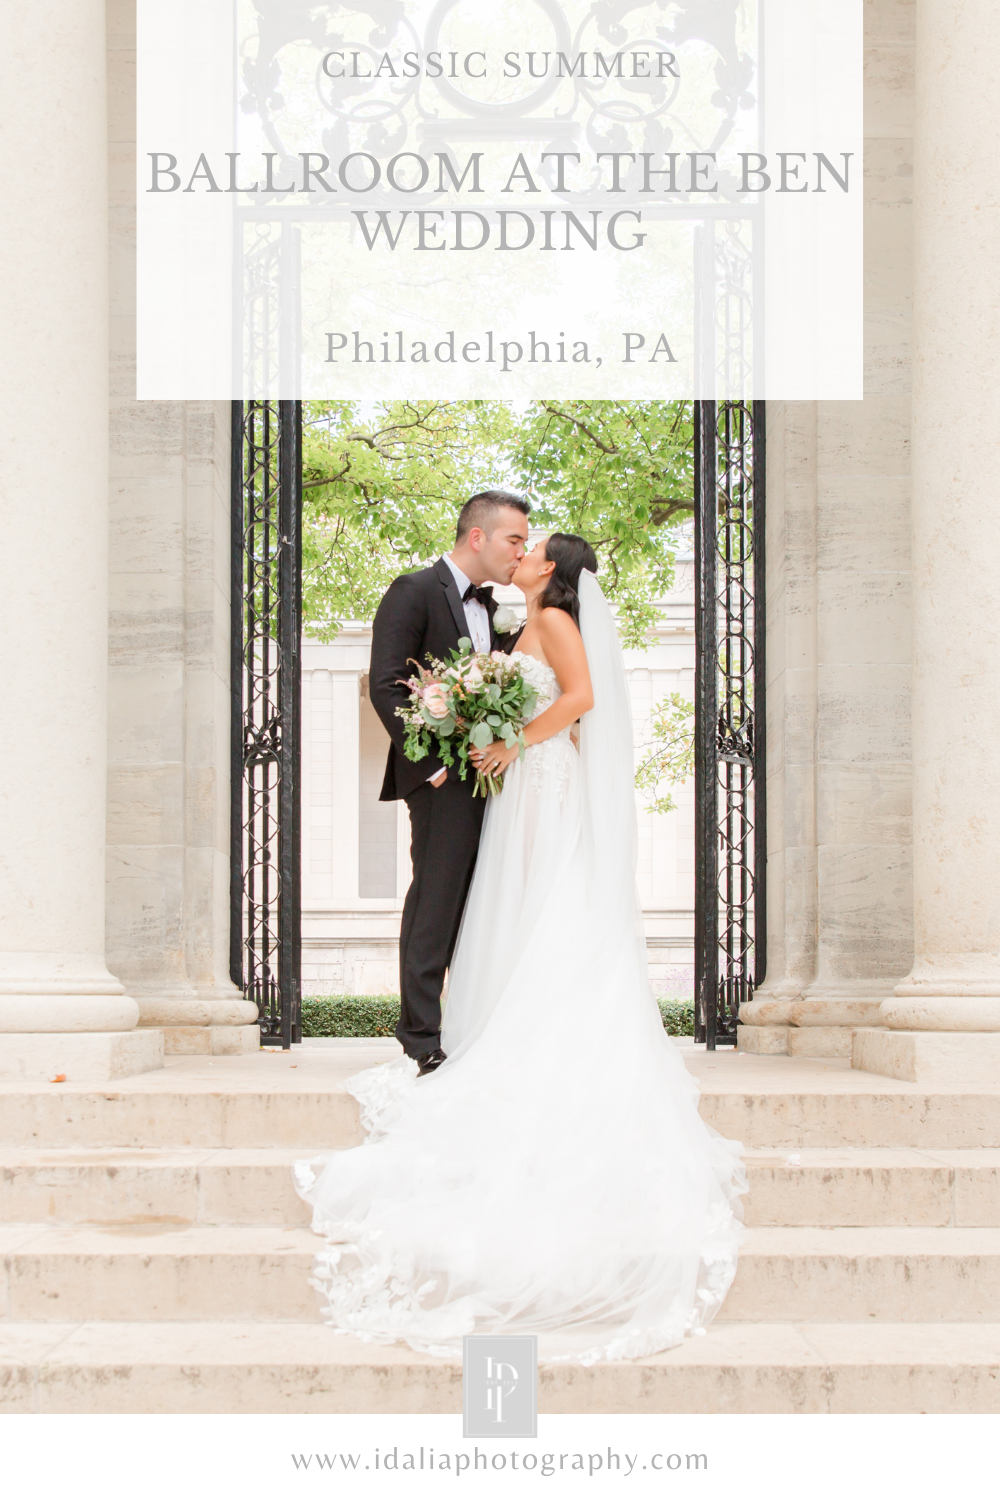 Philadelphia wedding day at the Ballroom at the Ben